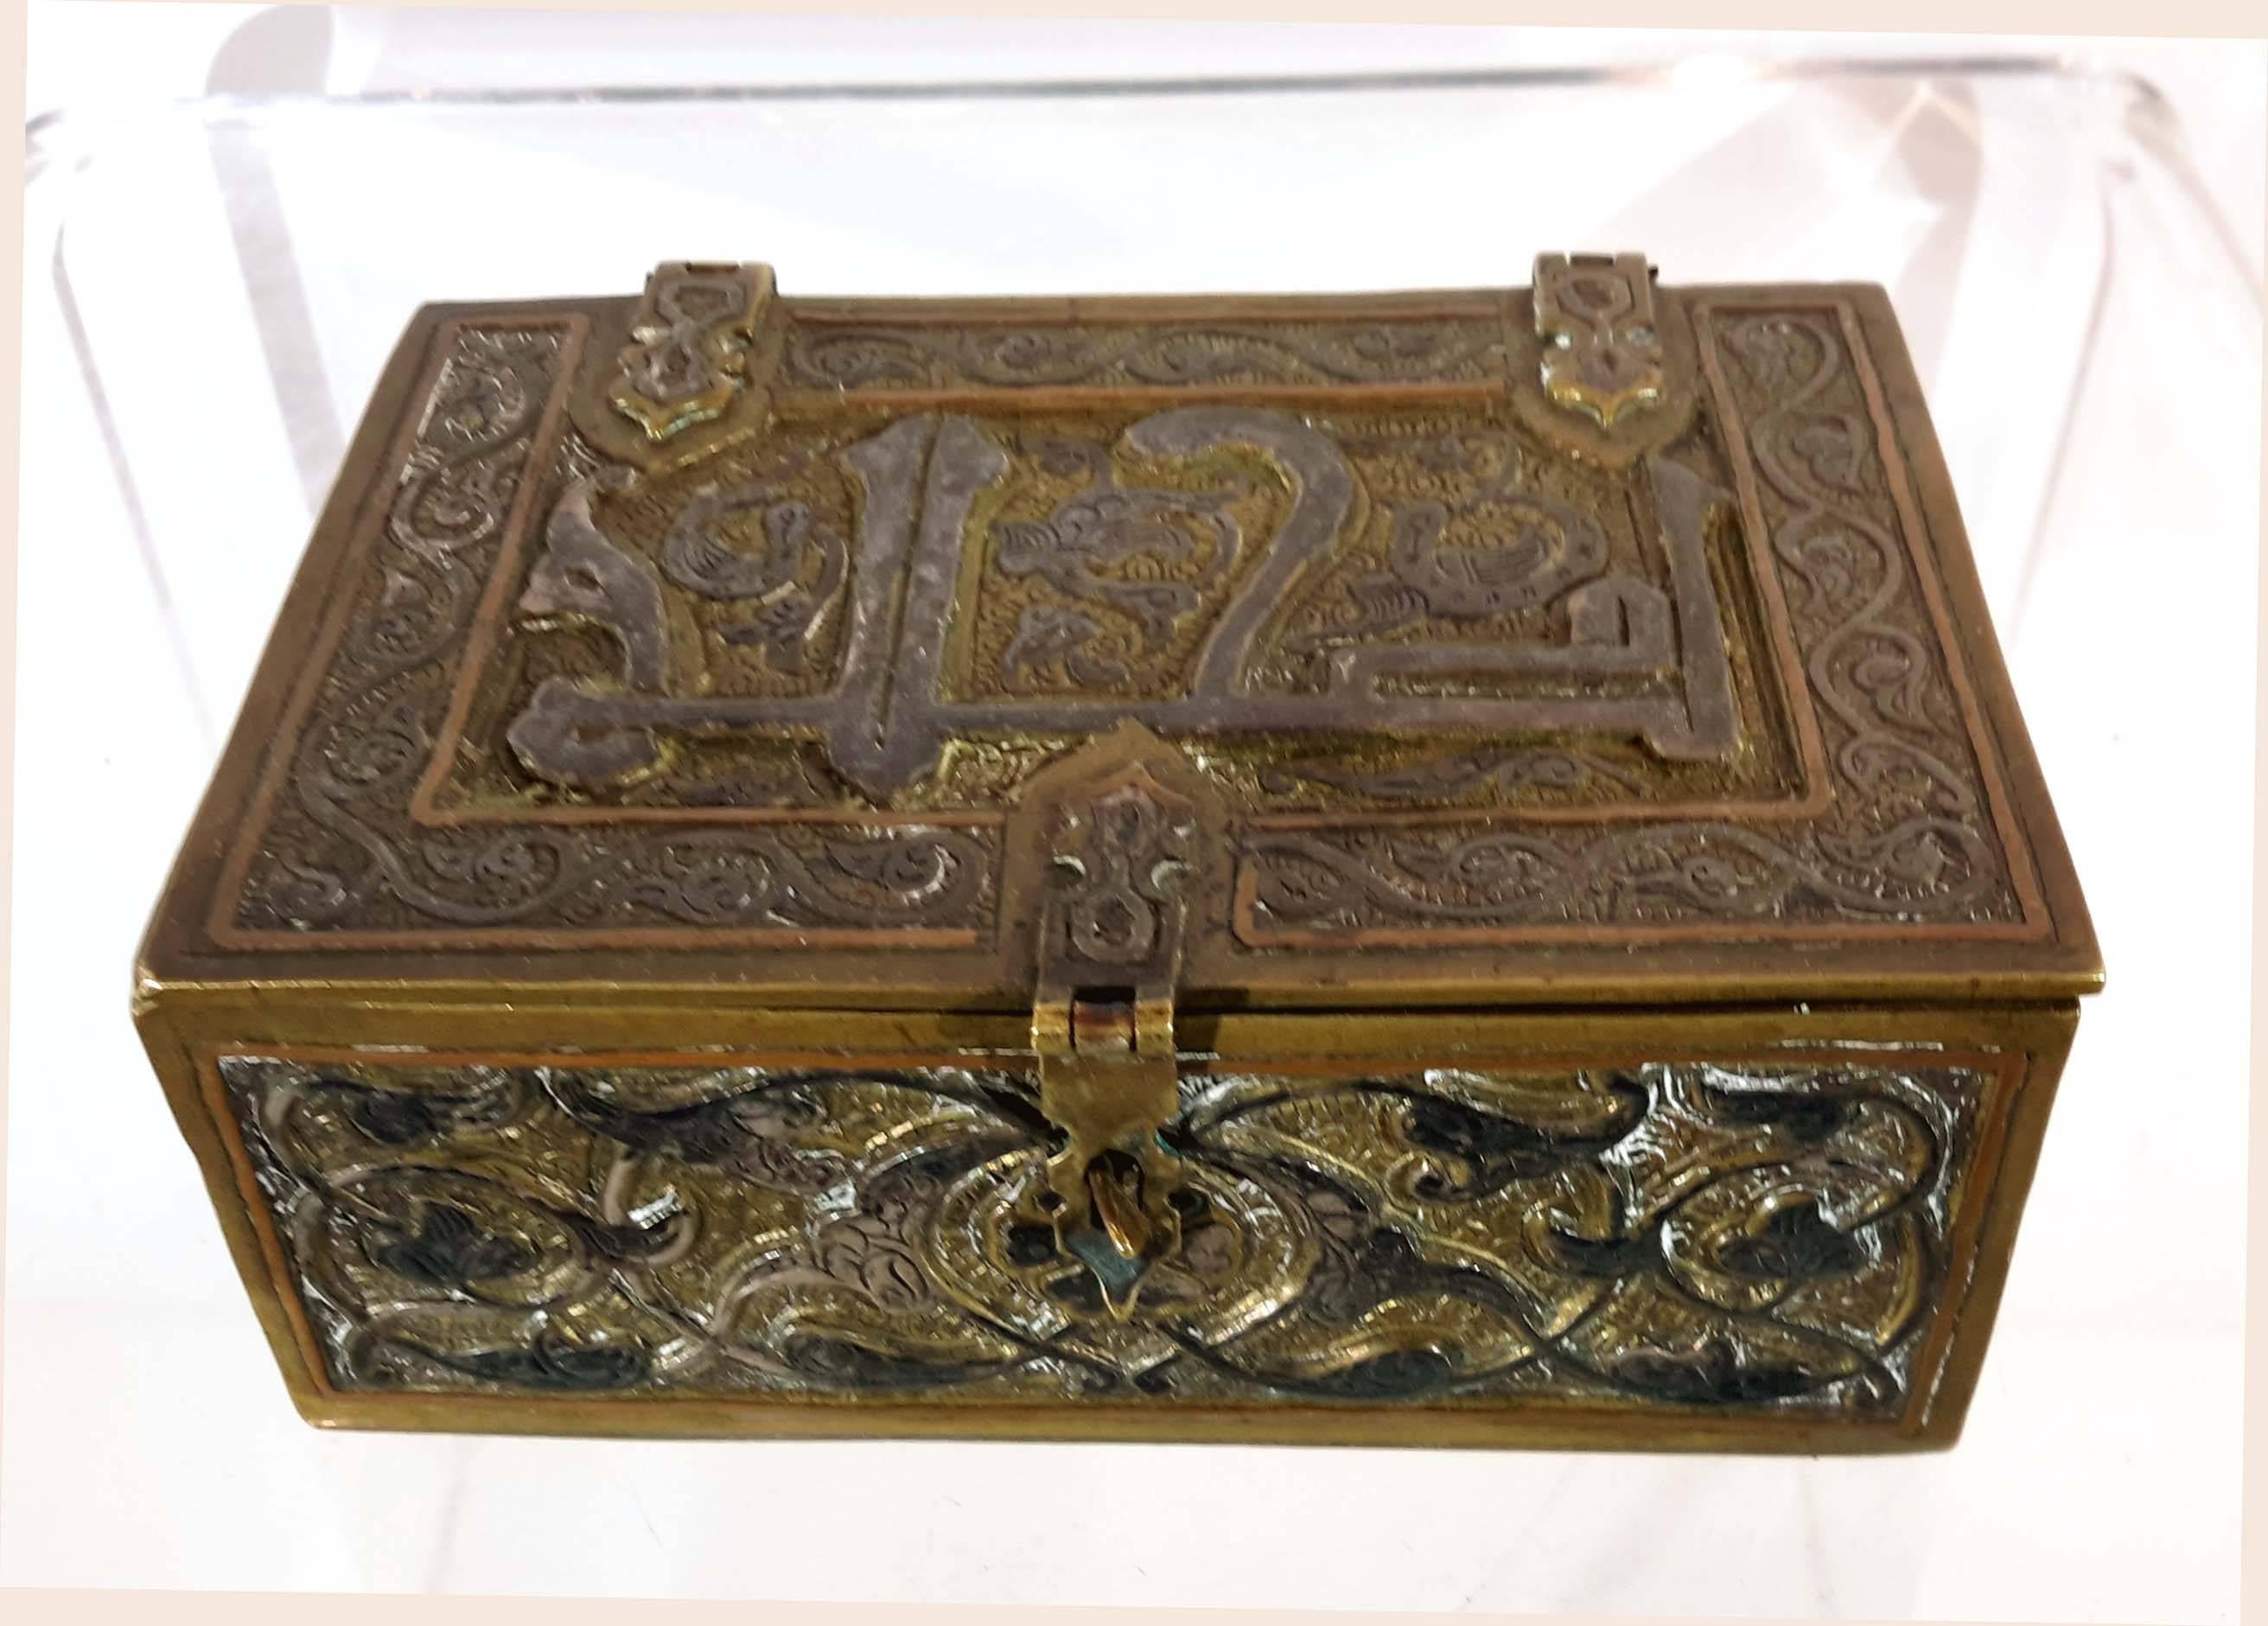 Islamic Silver Inlaid Islamis Brass Koran Box, Damascus, Syria, circa 1900 For Sale